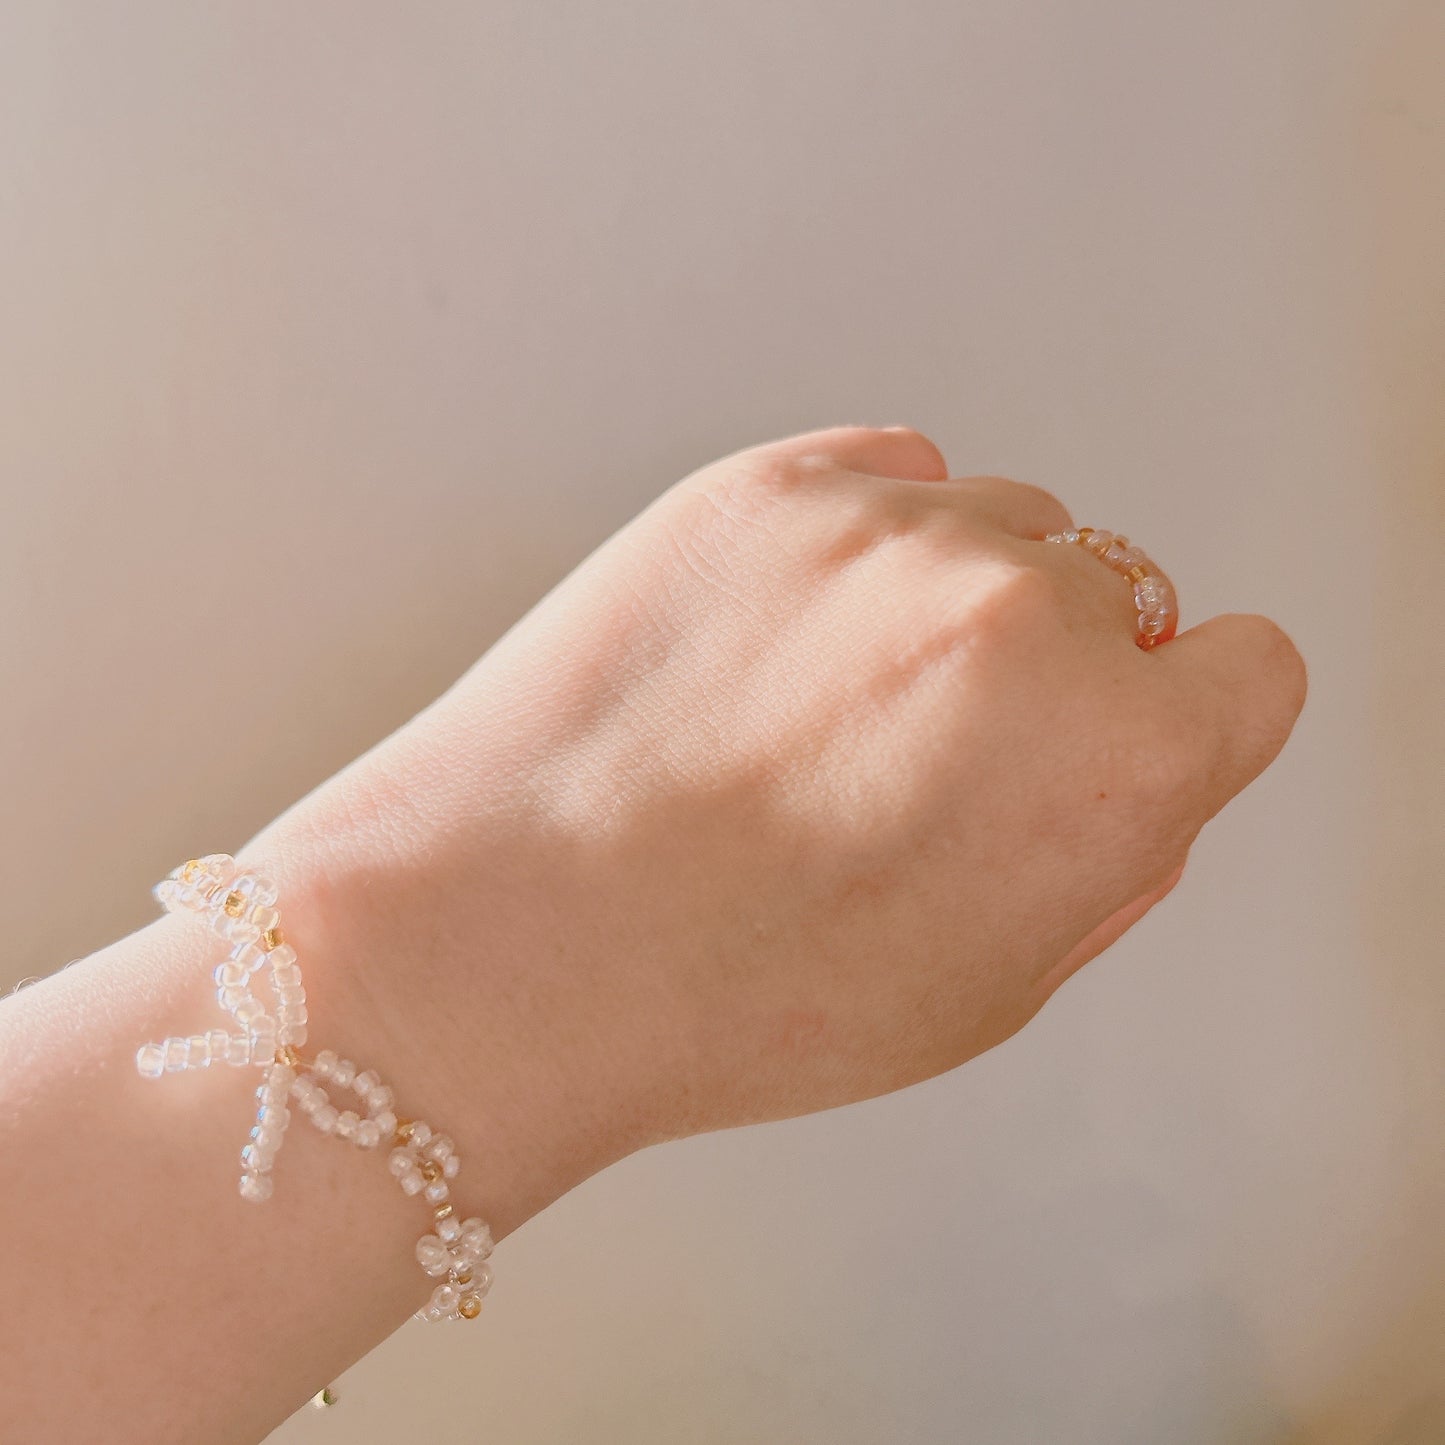 Ribbon Bow beaded Bracelet, handmade Beads bracelet, Bead Necklace, Dainty Jewellery